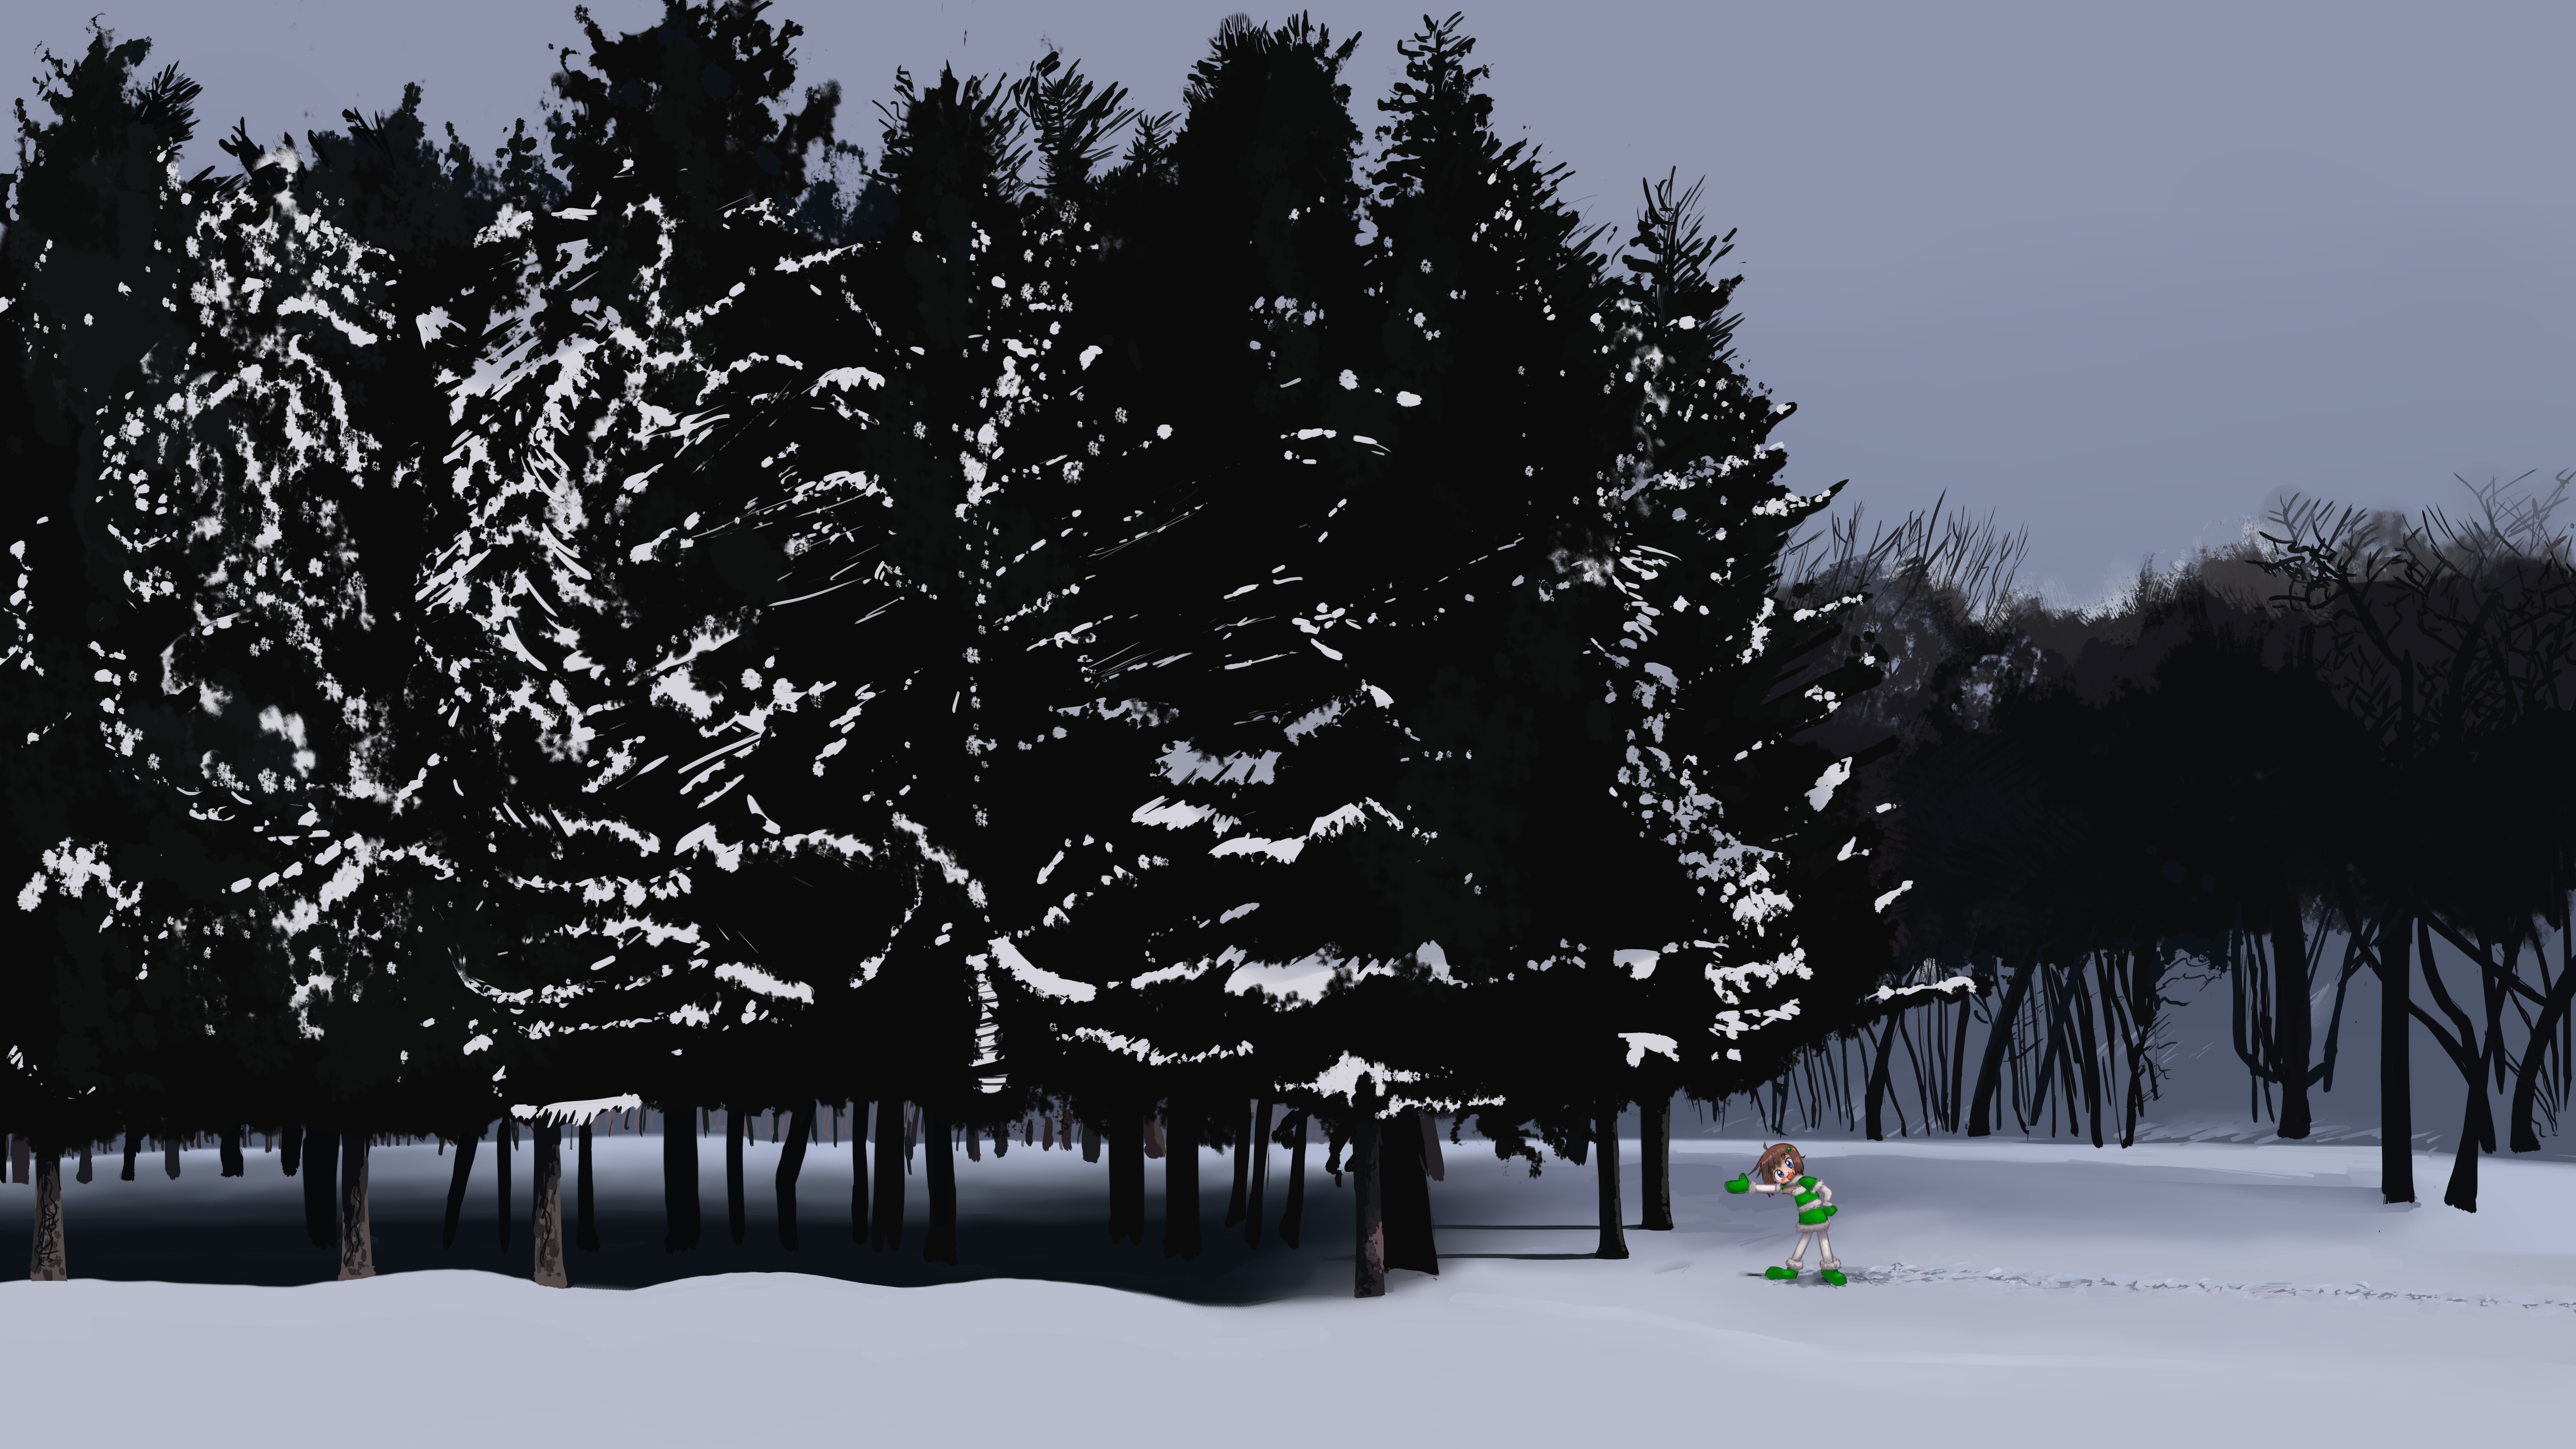 Lily by da snow trees